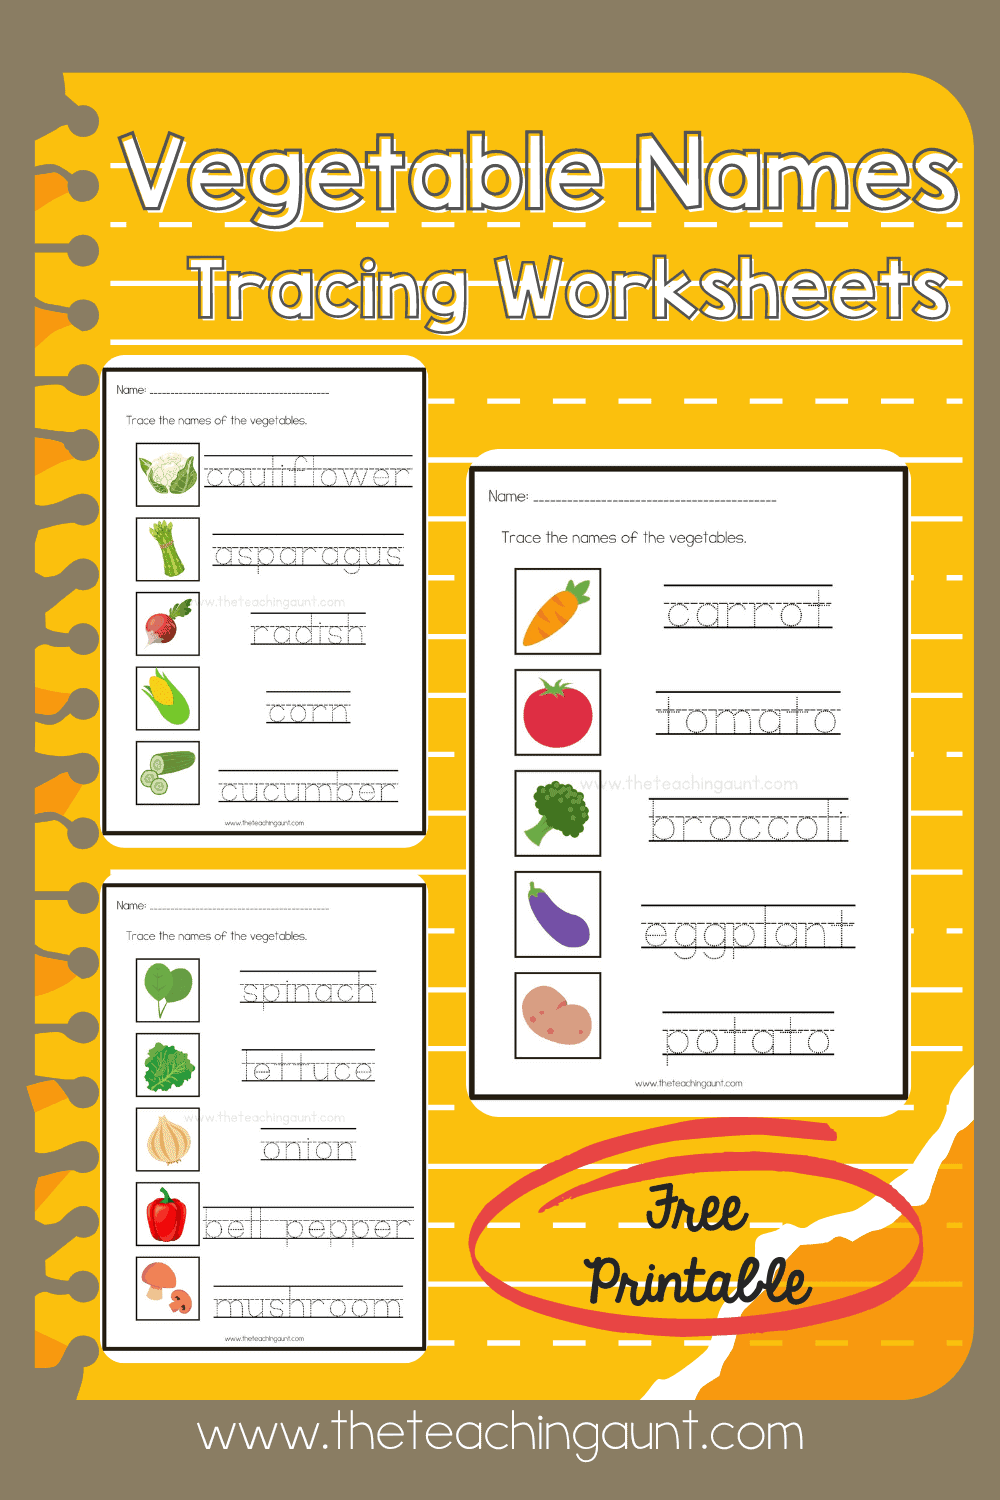 Free Vegetable Tracing Worksheets